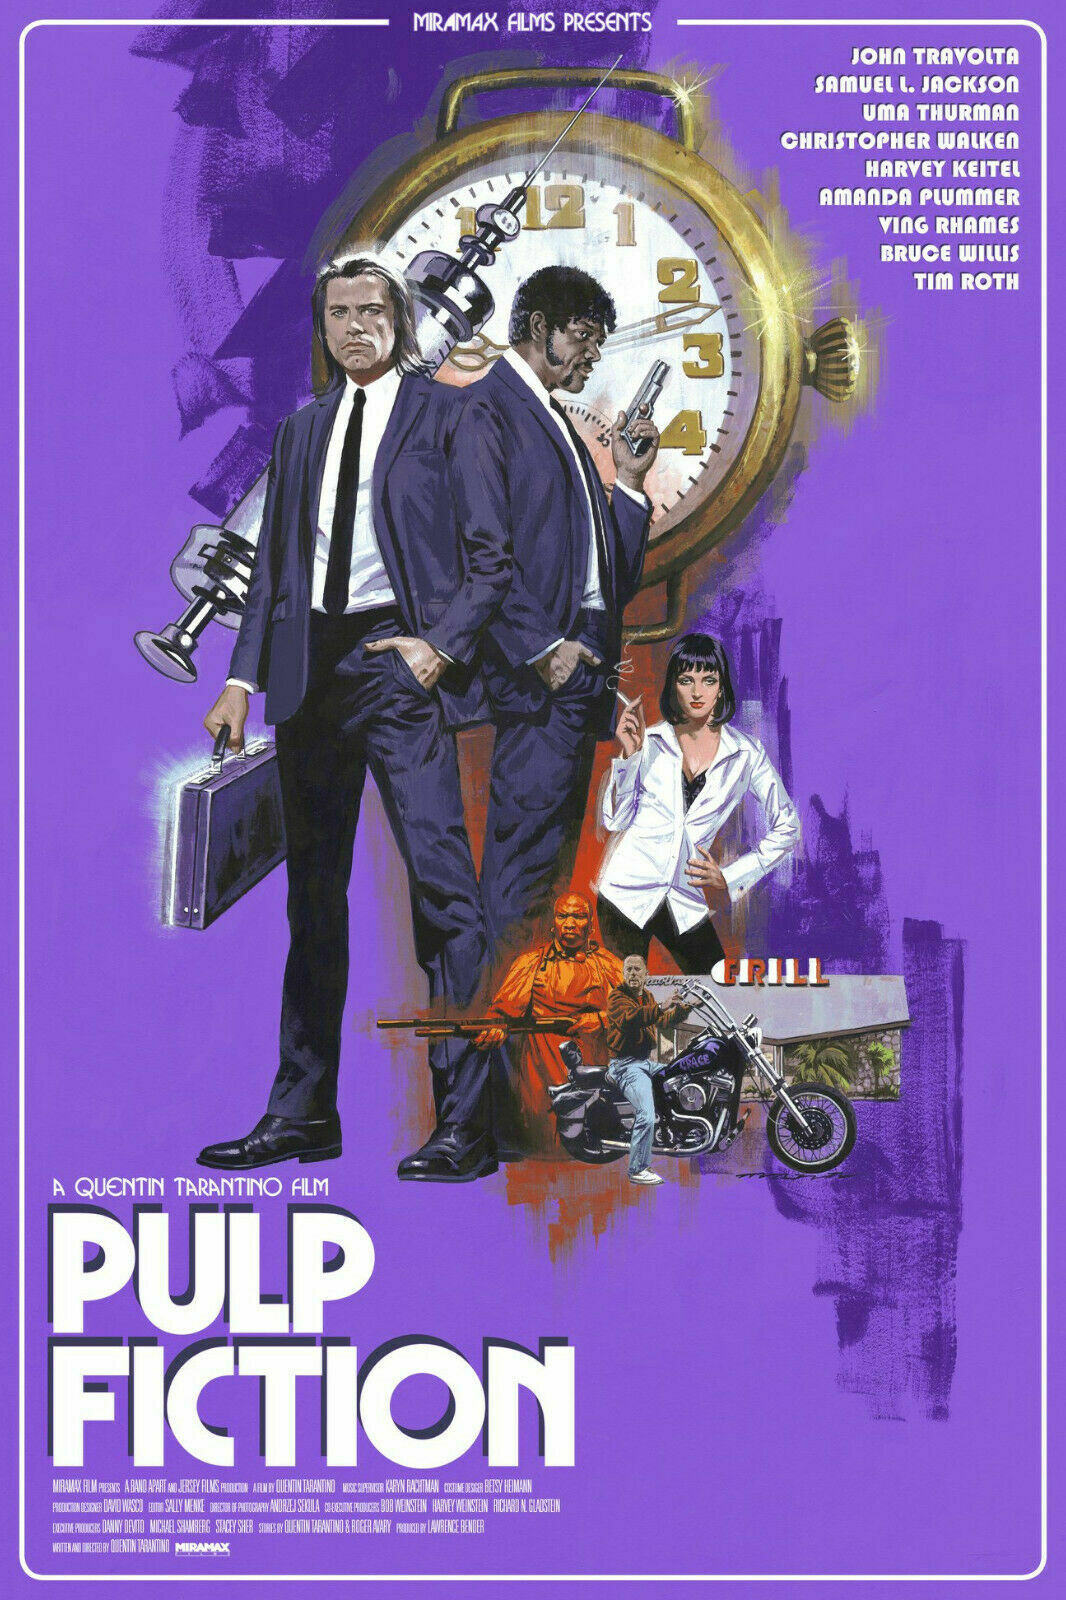 Pulp Fiction by Paul Mann